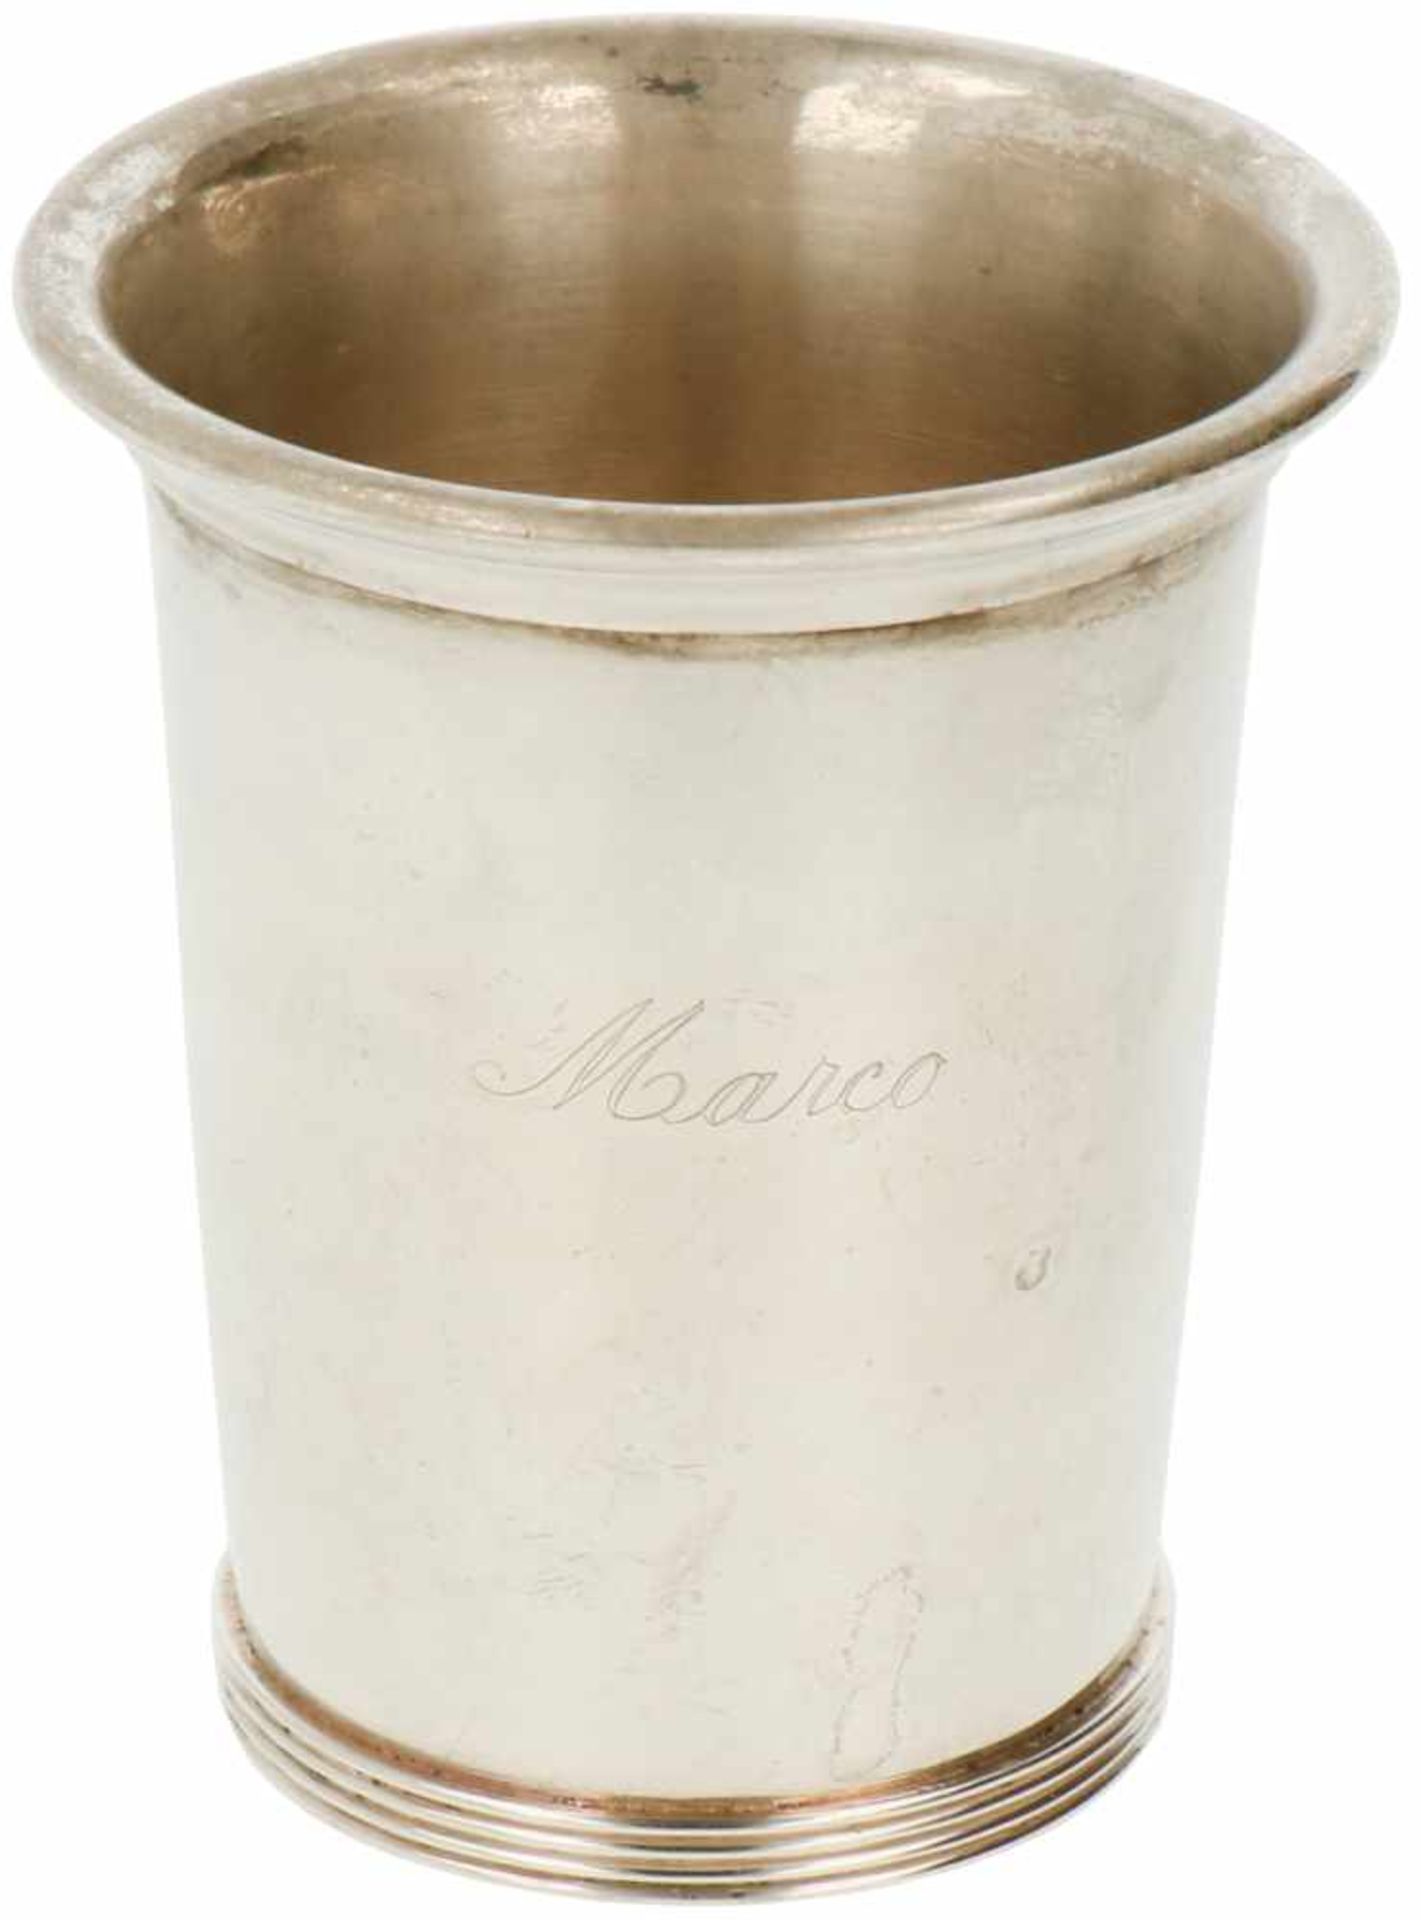 Silver birth cup.